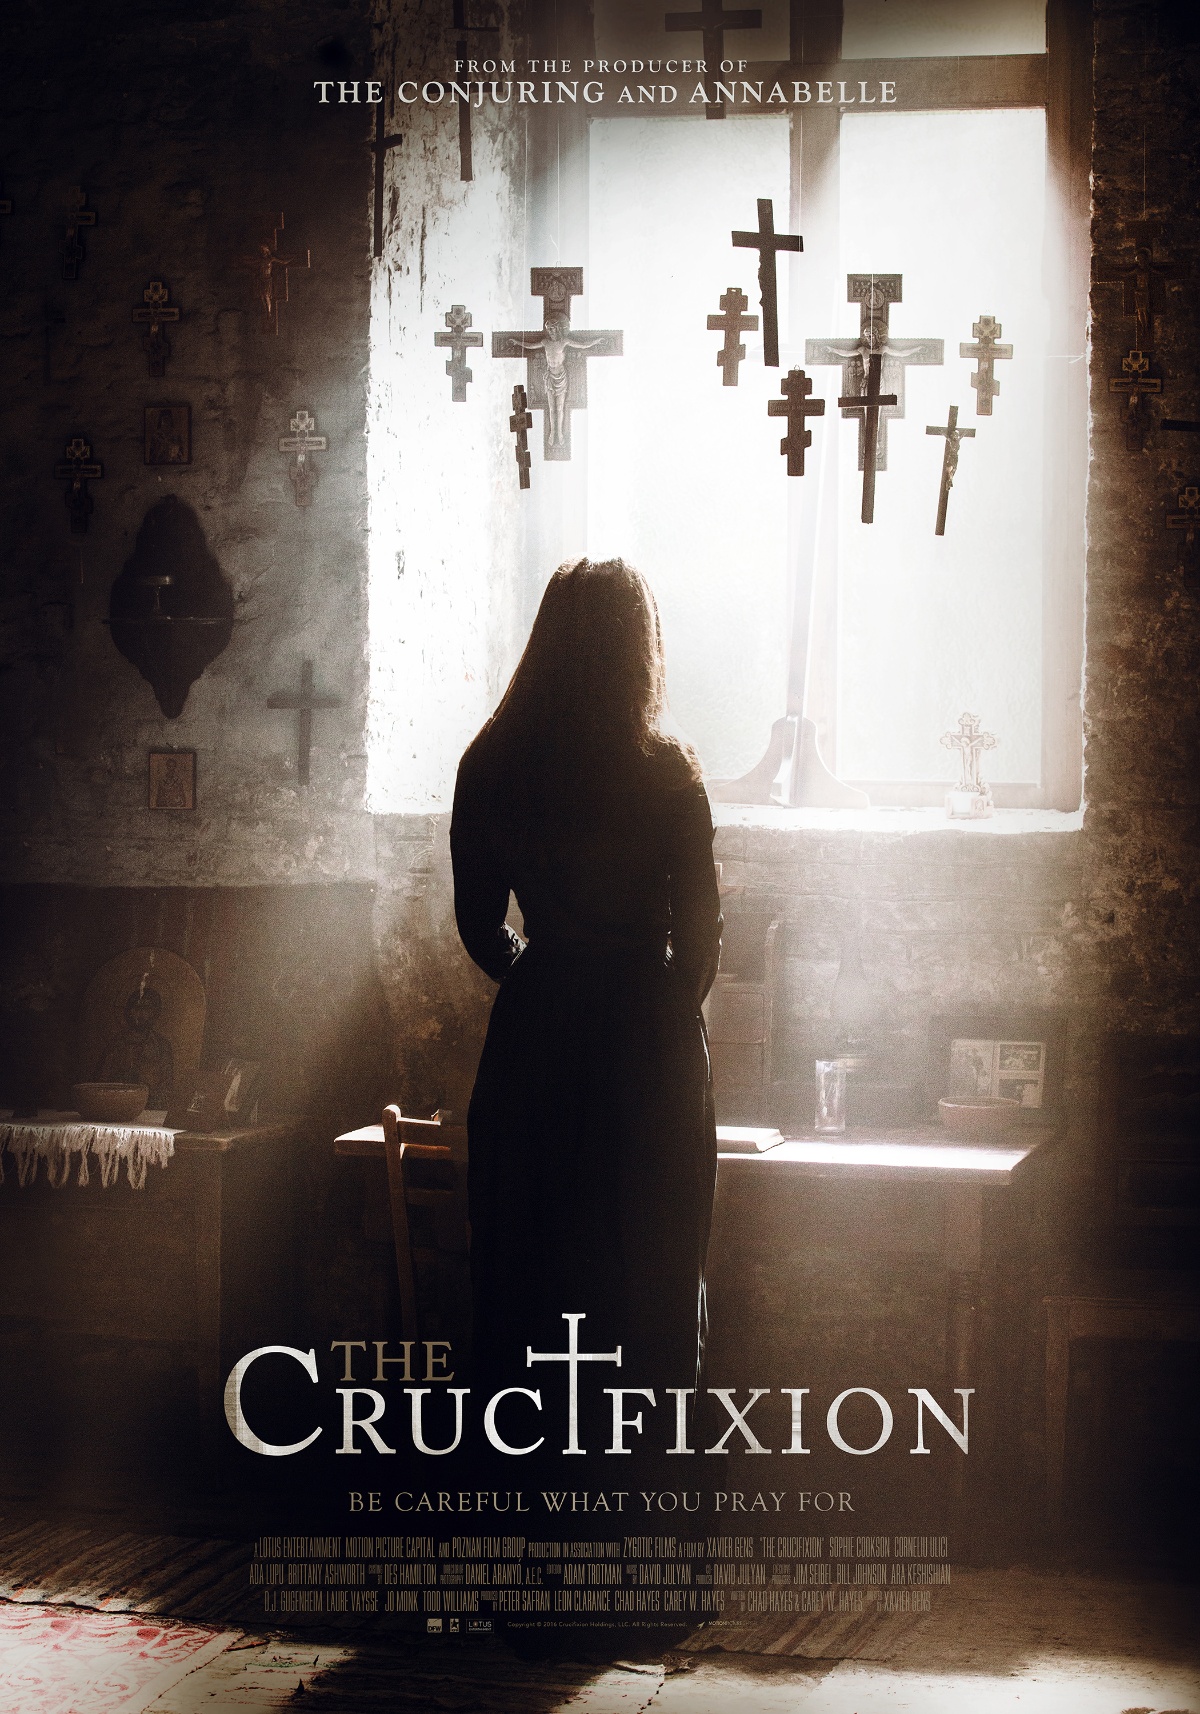 Nonton film The Crucifixion layarkaca21 indoxx1 ganool online streaming terbaru